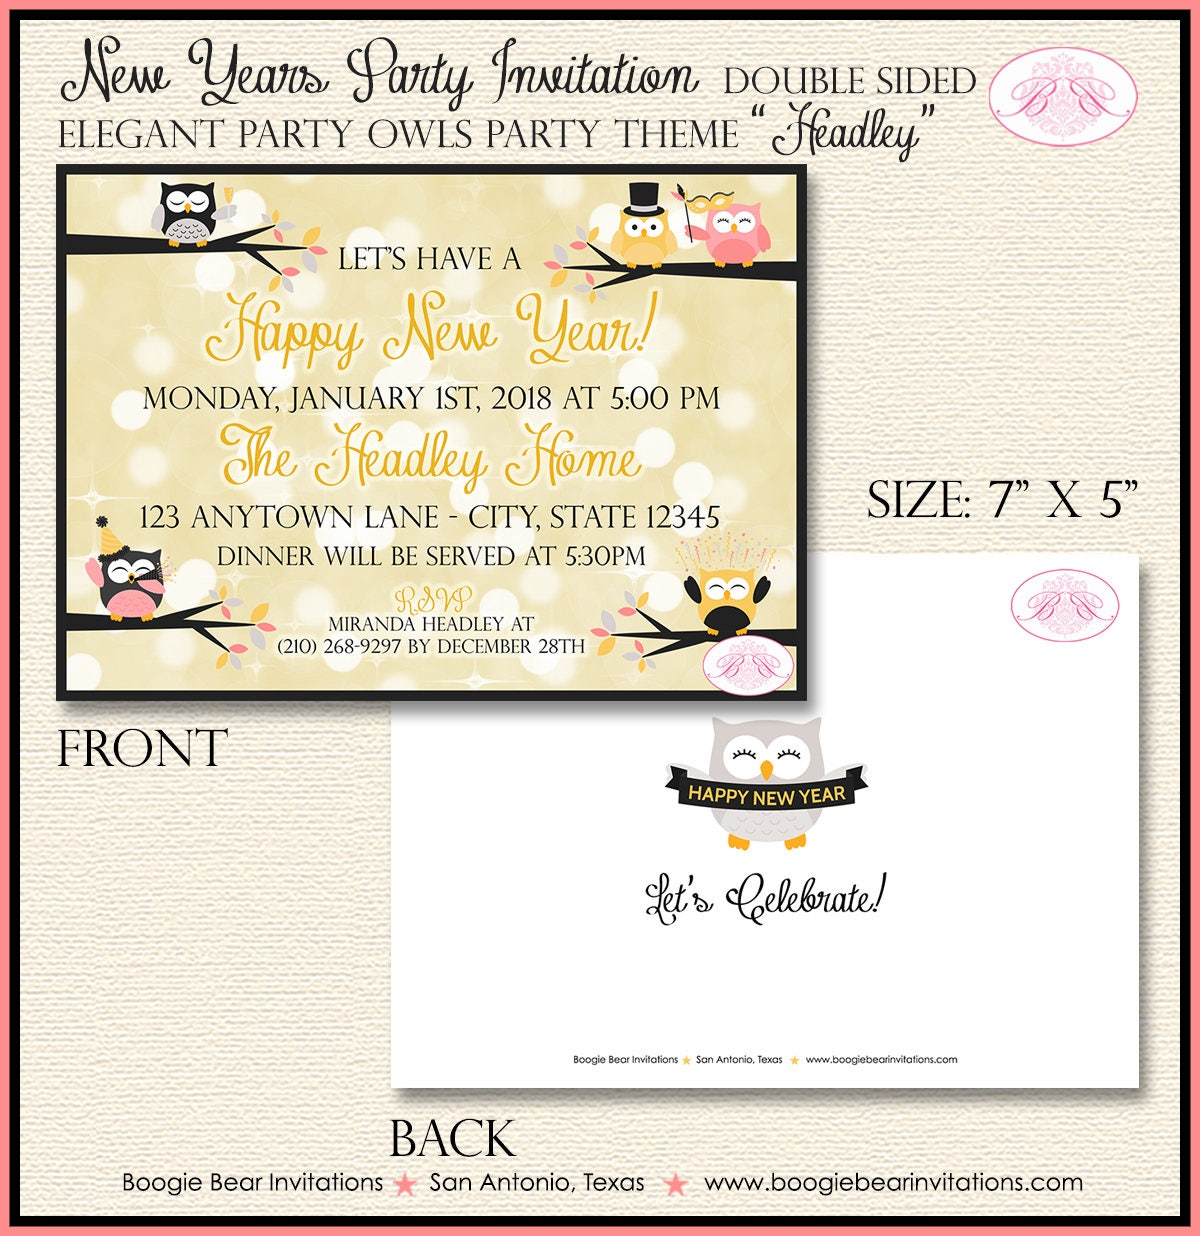 Happy New Year Party Invitation Bokeh Owls Dinner Elegant Rose Gold Lights Boogie Bear Invitations Headley Theme Paperless Printable Printed